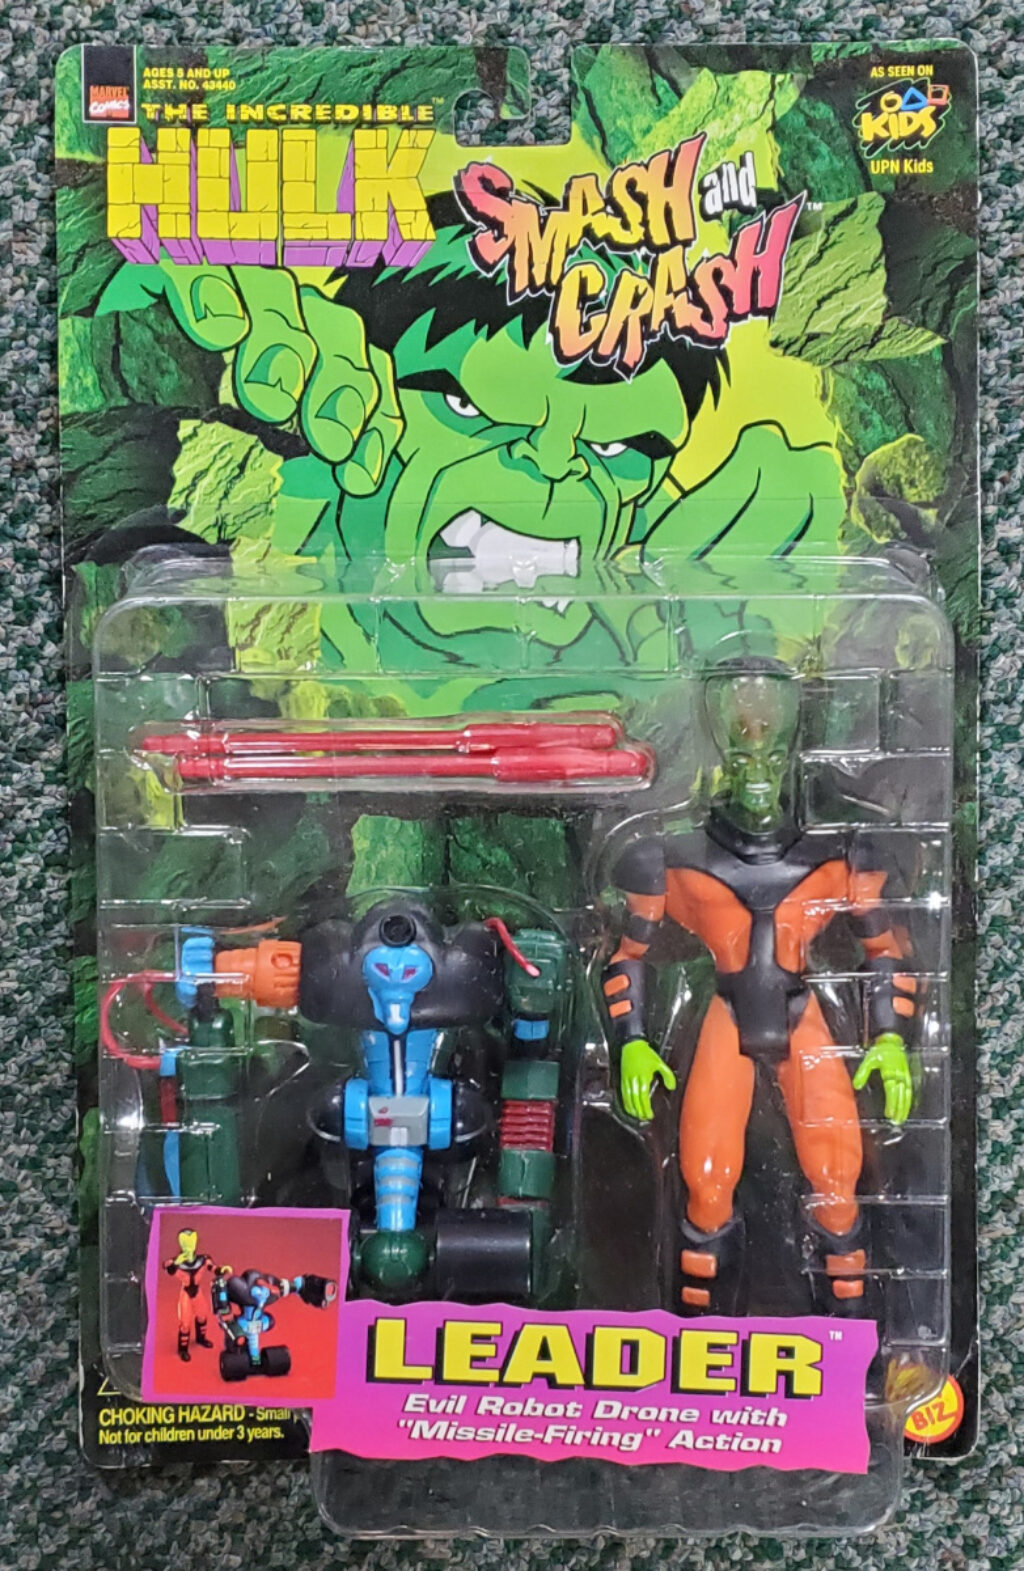 Toy Biz Incredible Hulk Smash and Crash Leader Action Figure: Mint on Card 1